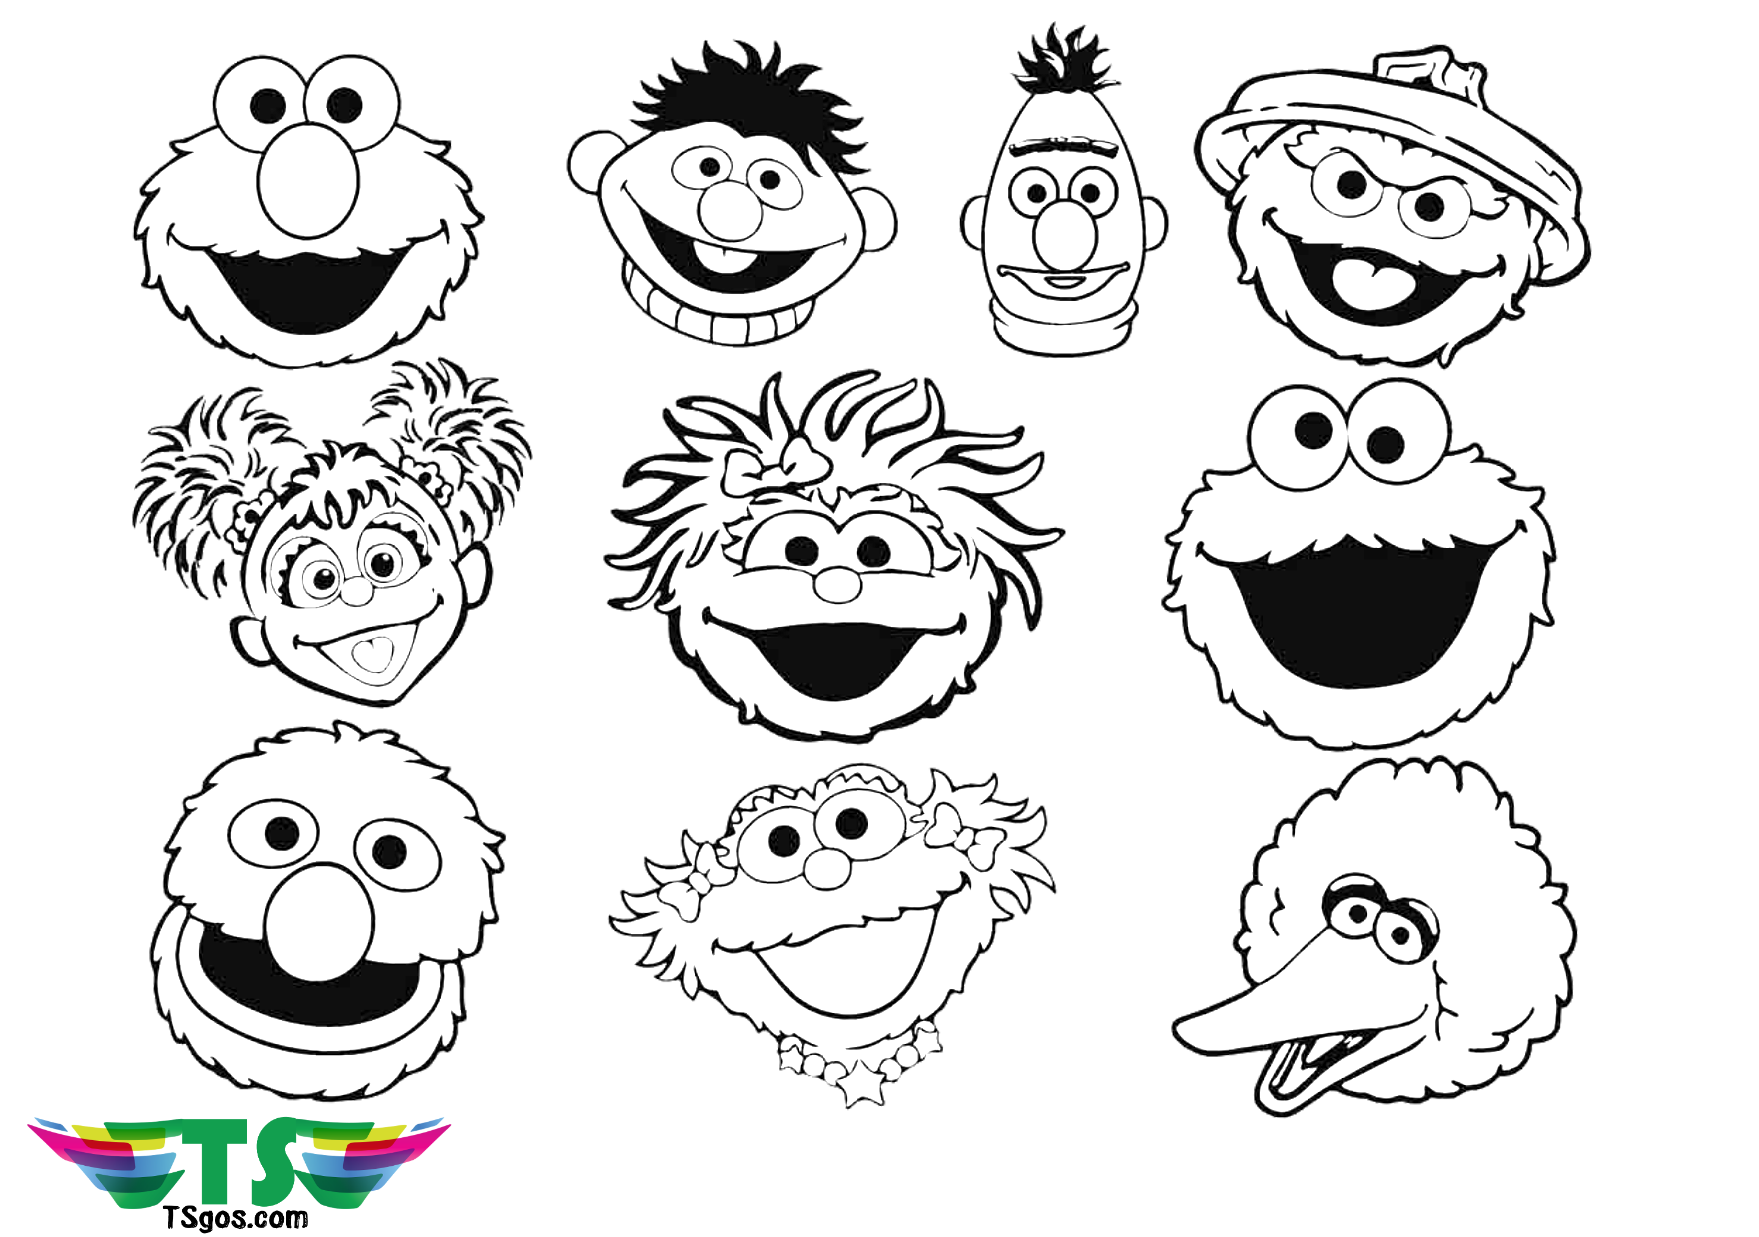 Sesame Street characters coloring sheet